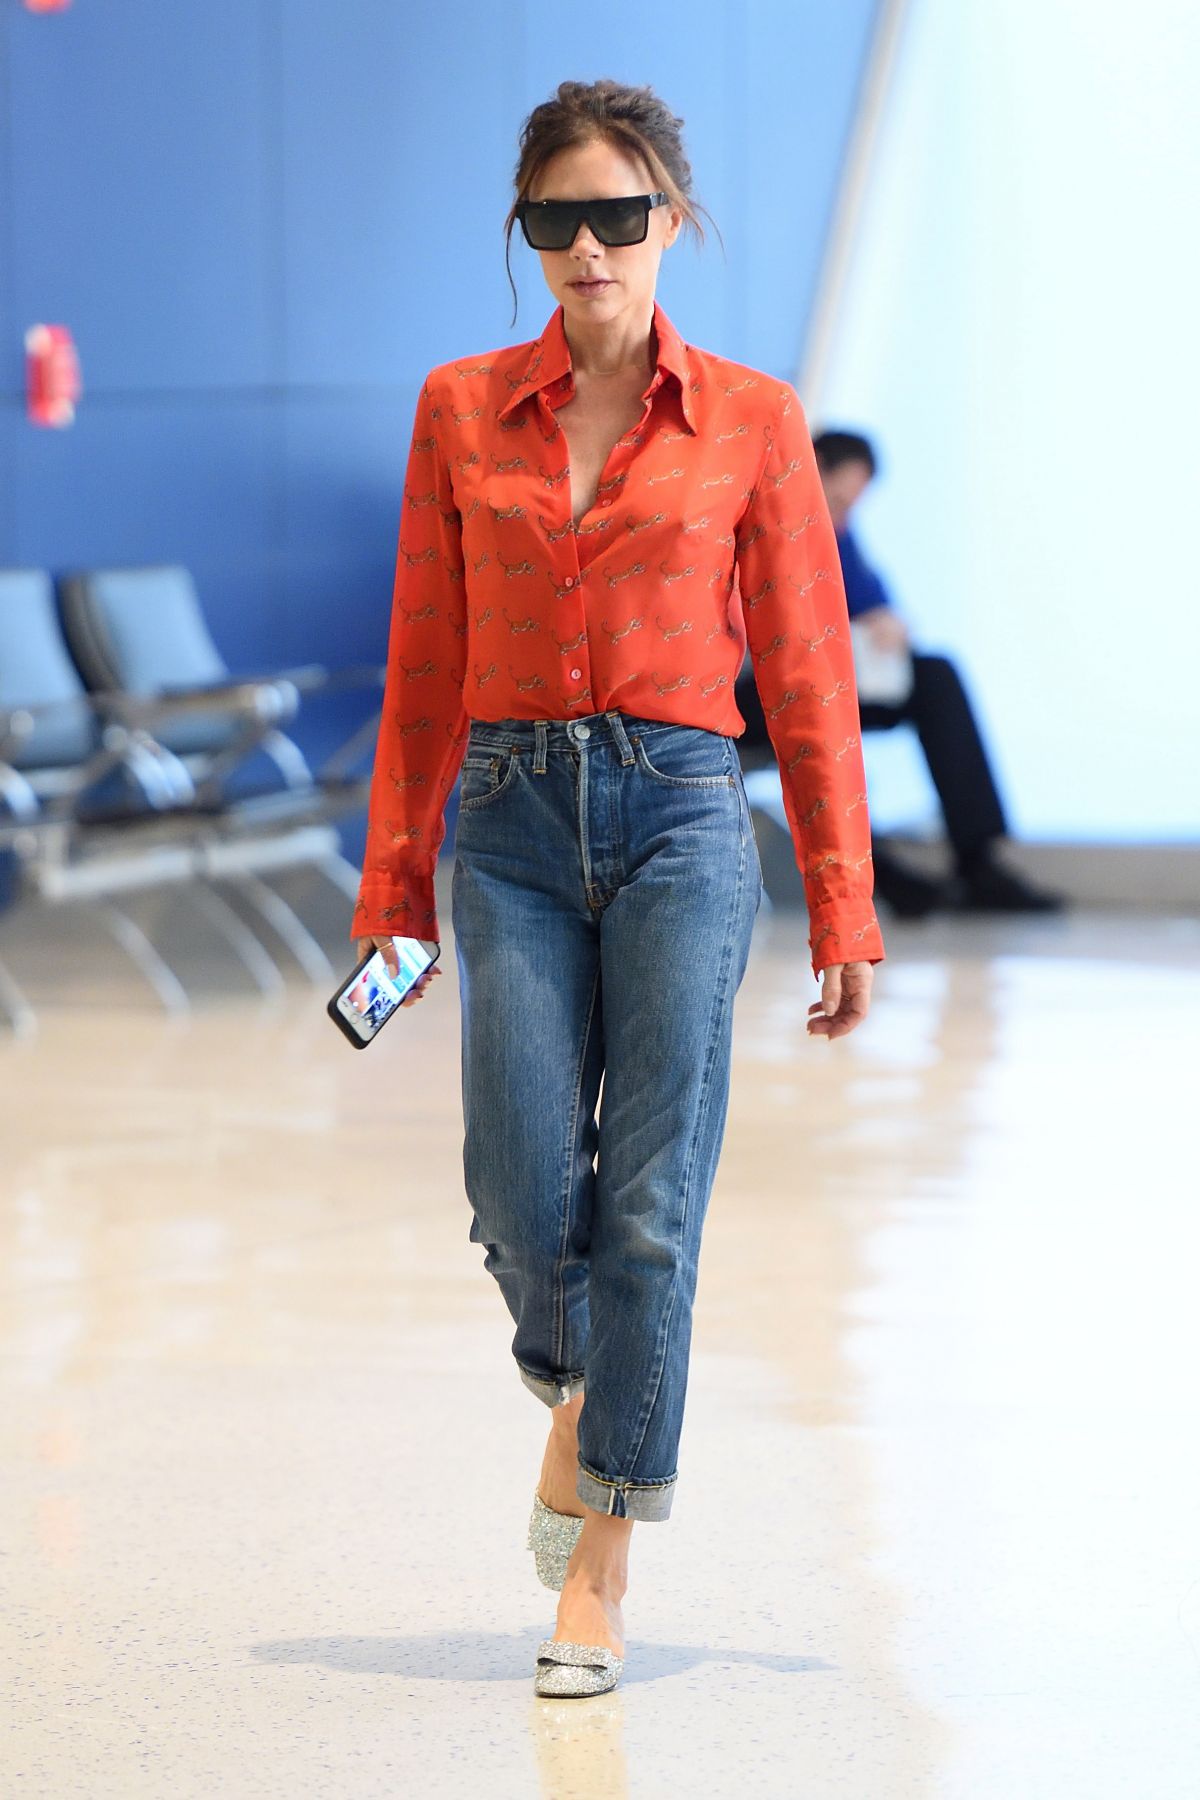 VICTORIA BECKHAM Arrives at JFK Airport in New York 09/15/2017 – HawtCelebs